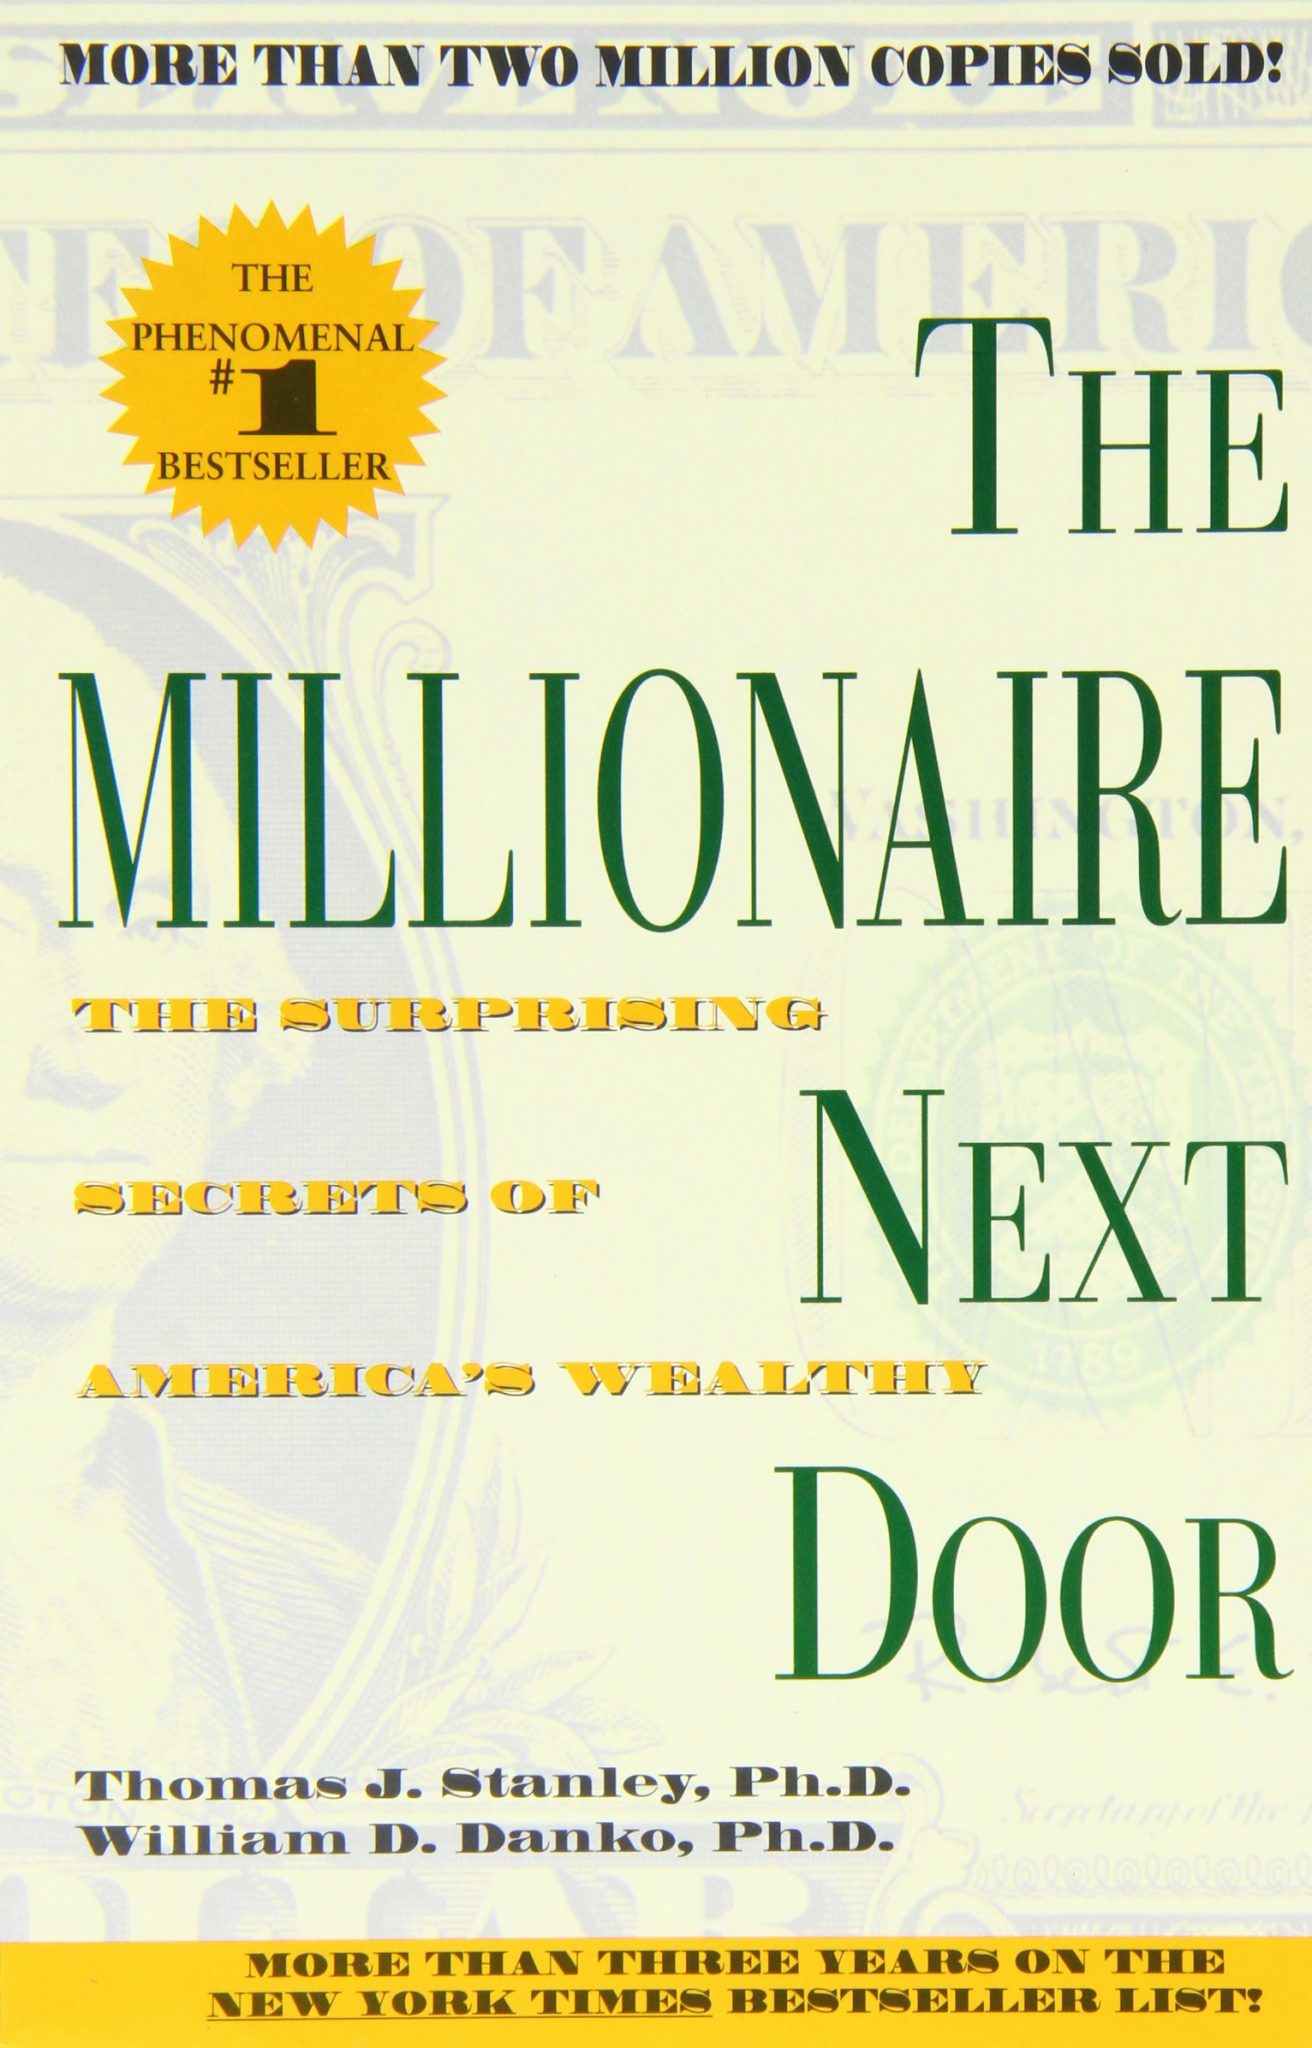 The Millionaire Next Door by Thomas J. Stanley and William D. Danko